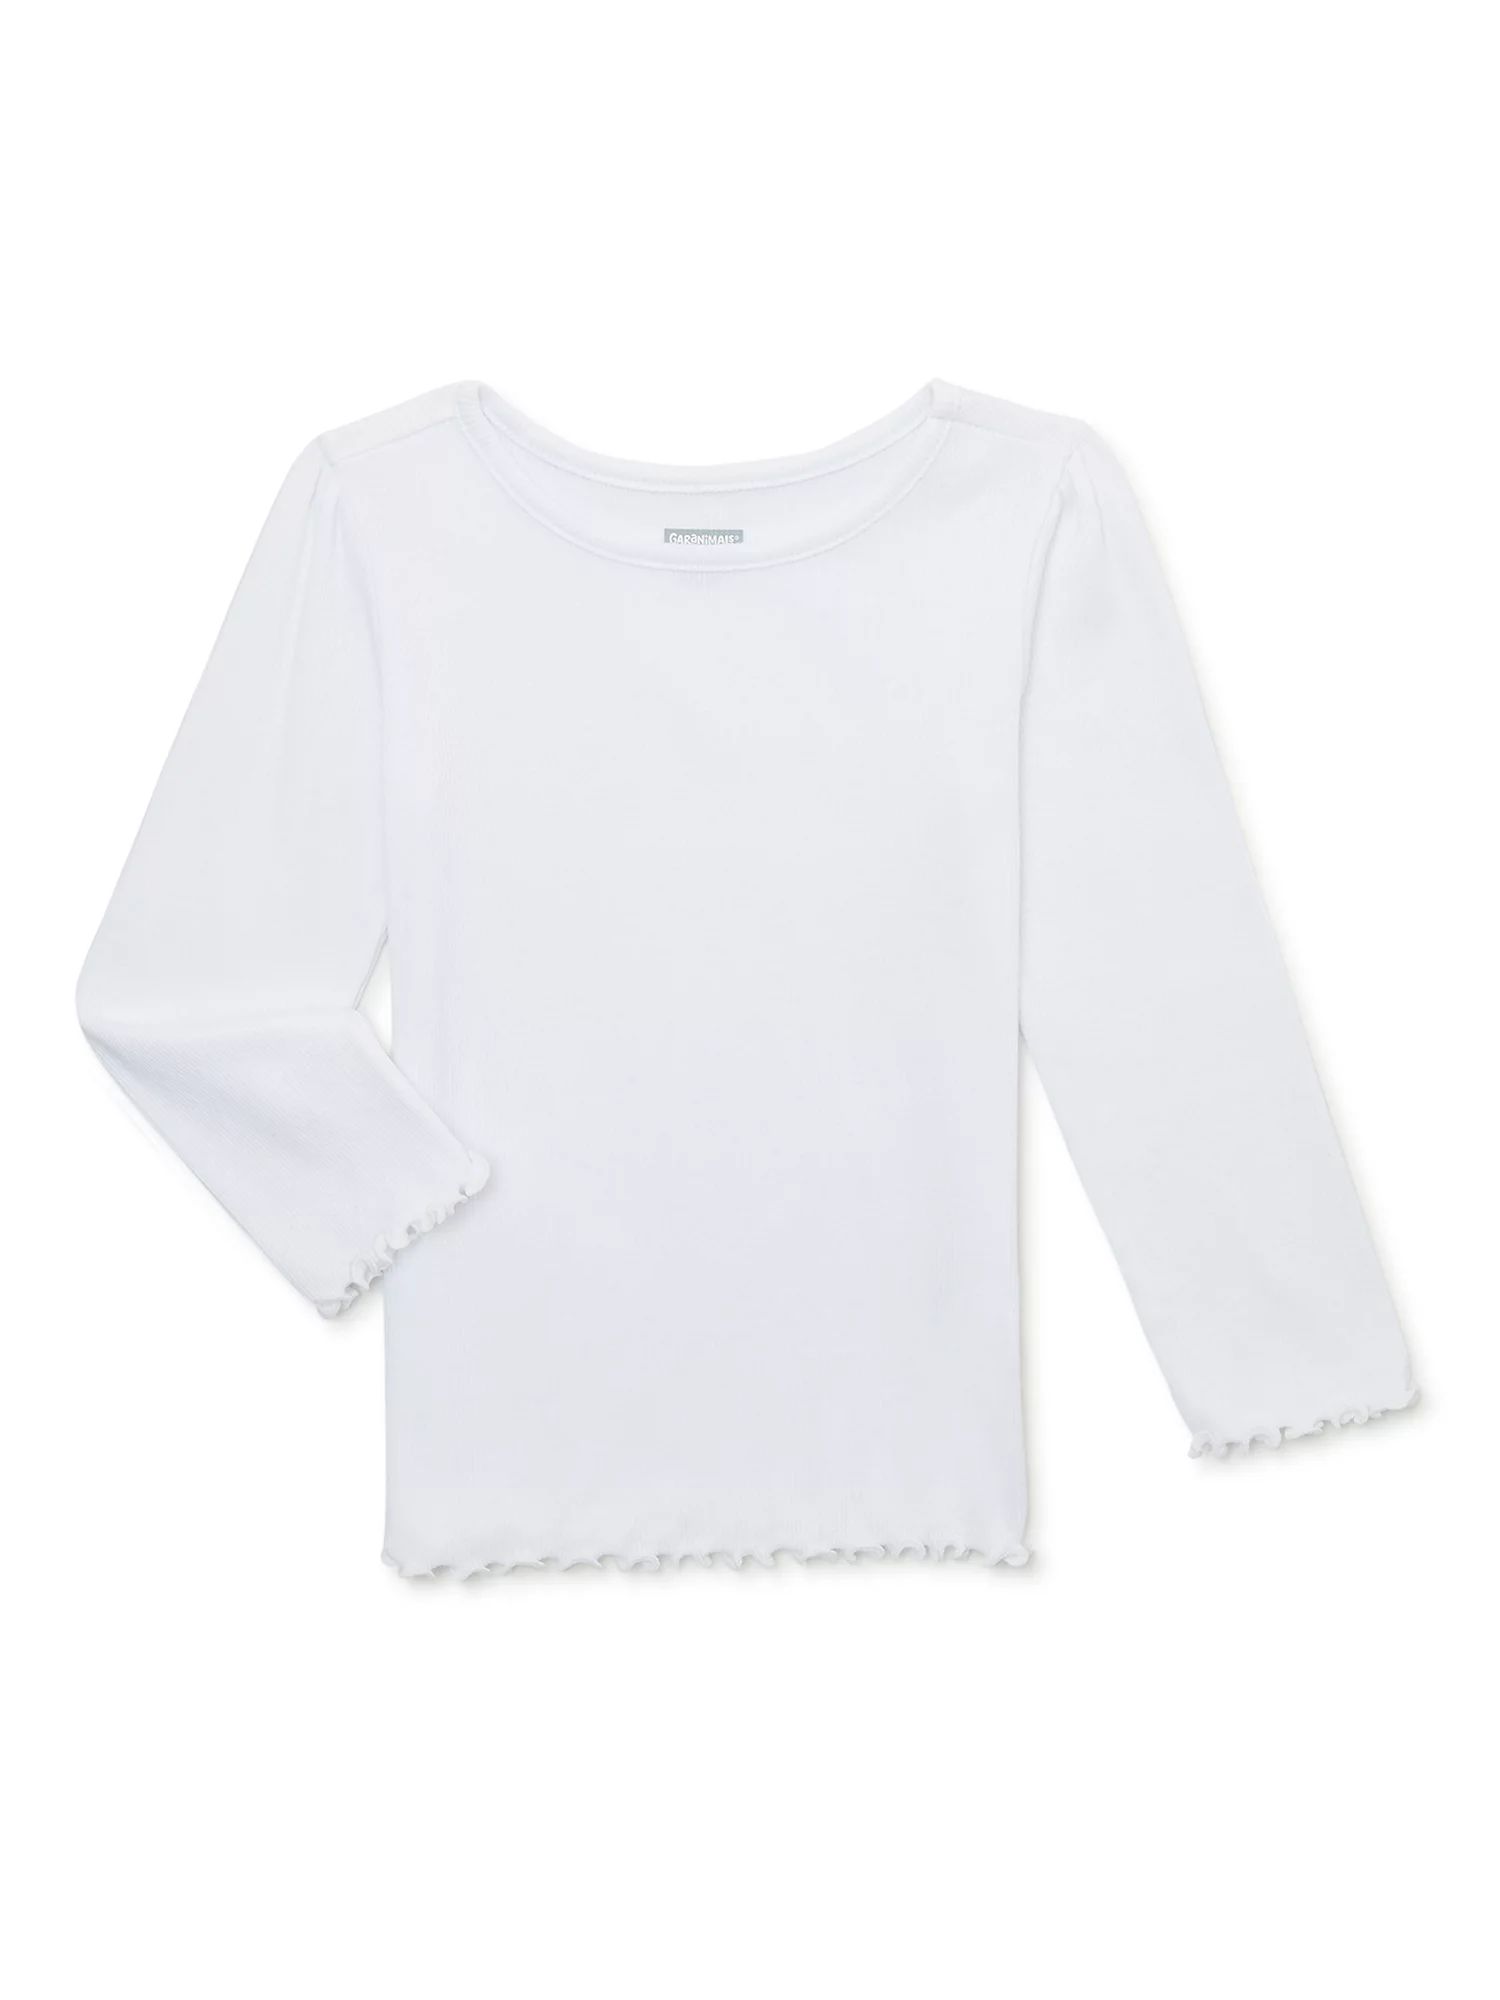 Garanimals Baby and Toddler Girls Long Sleeve Solid Rib T-Shirt, Sizes 12 Months-5T | Walmart (US)